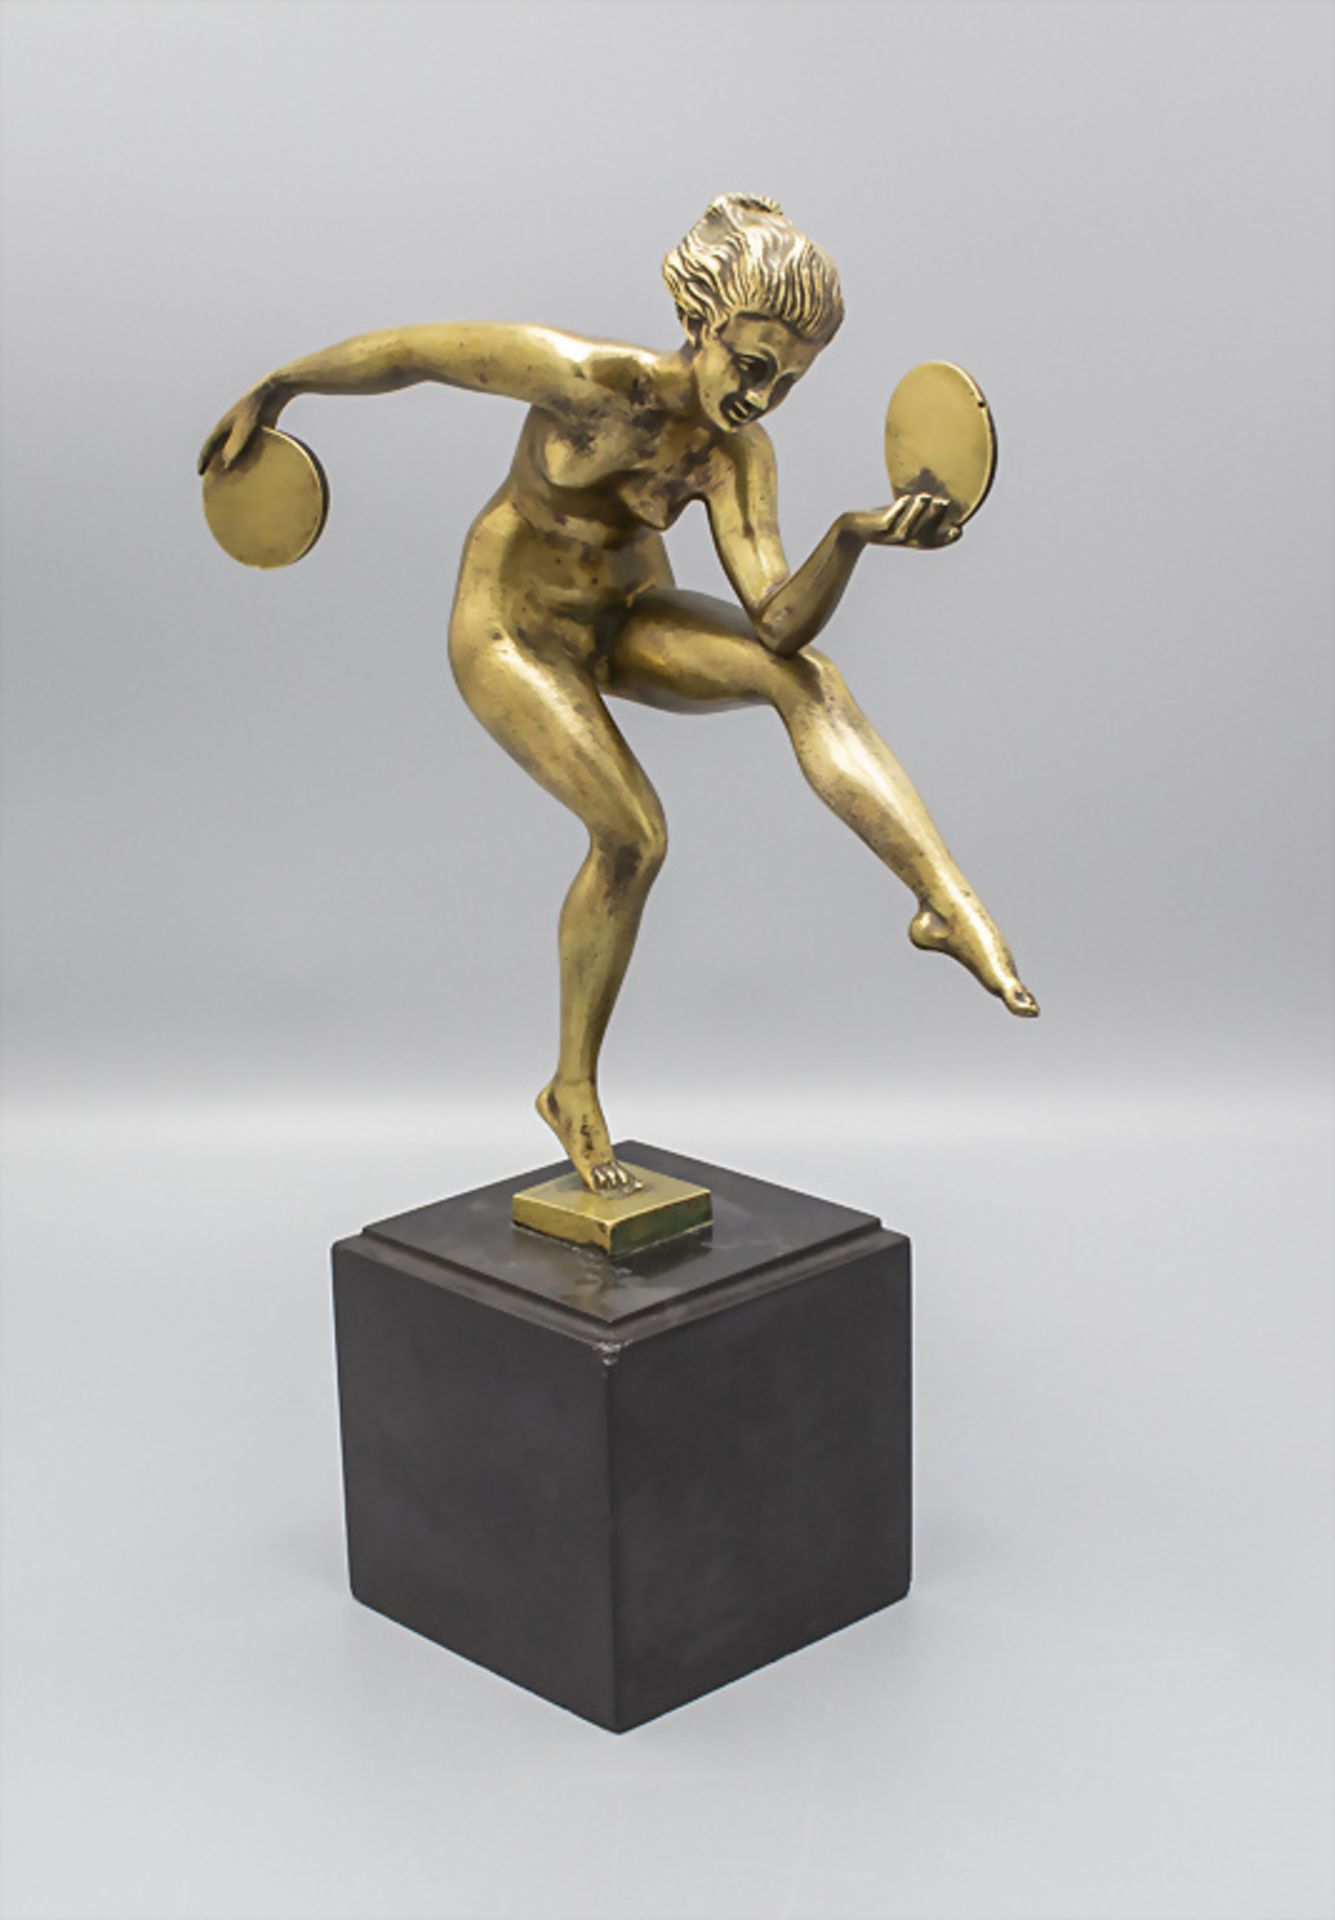 Art Déco Bronze 'Scheibentänzerin' / An Art Deco bronze 'Disc dancer', nach 1925 - Image 2 of 7